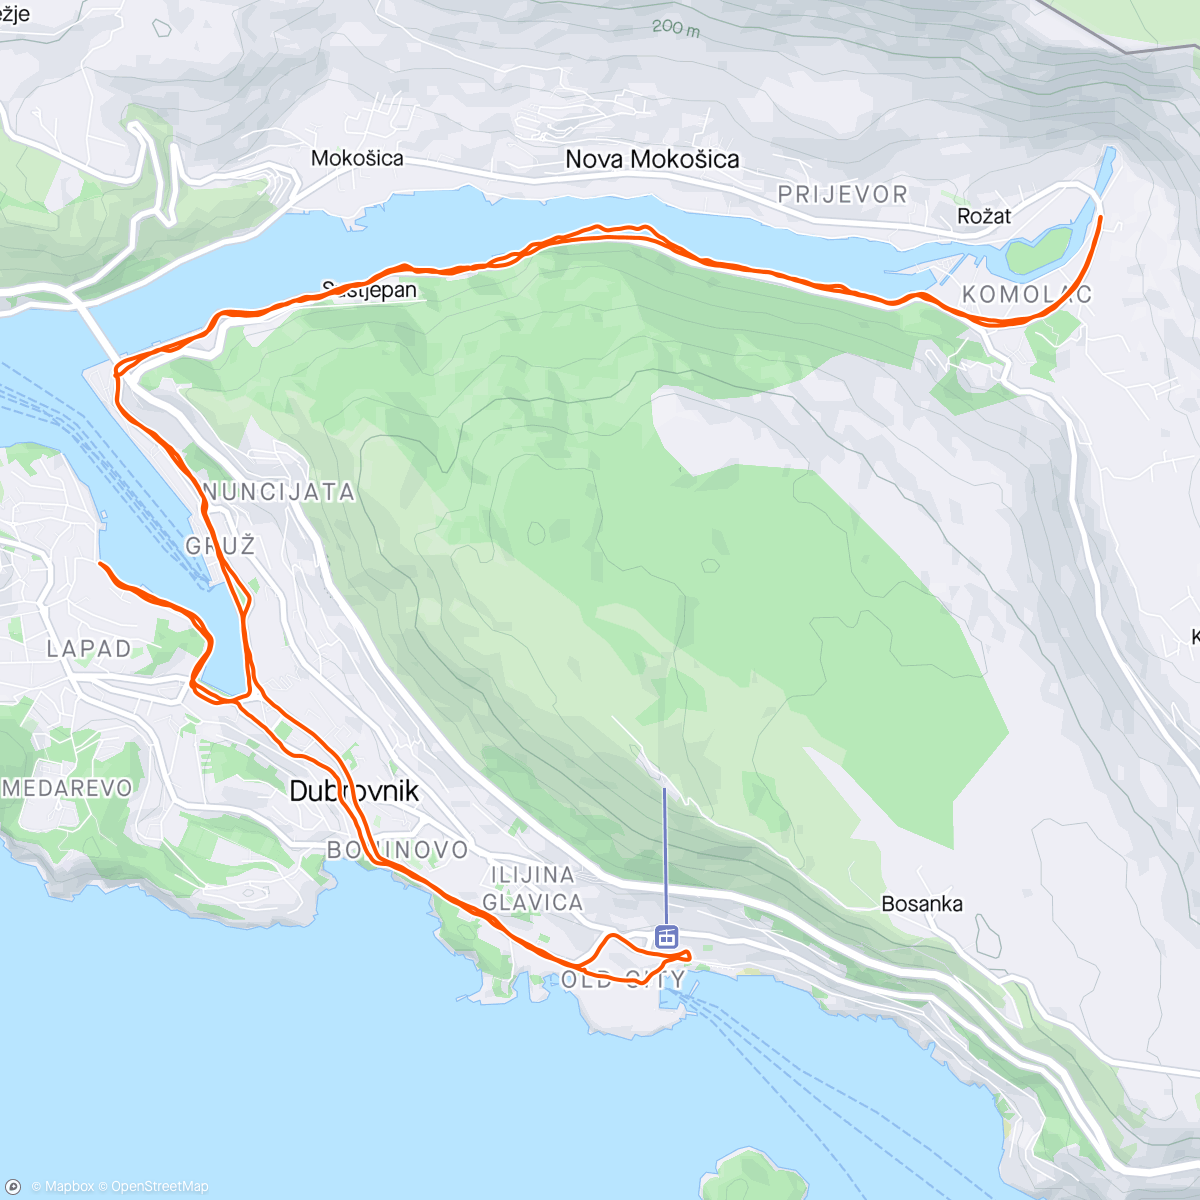 Kaart van de activiteit “Dubrovnik - polumaraton
8. mjesto ukupno”